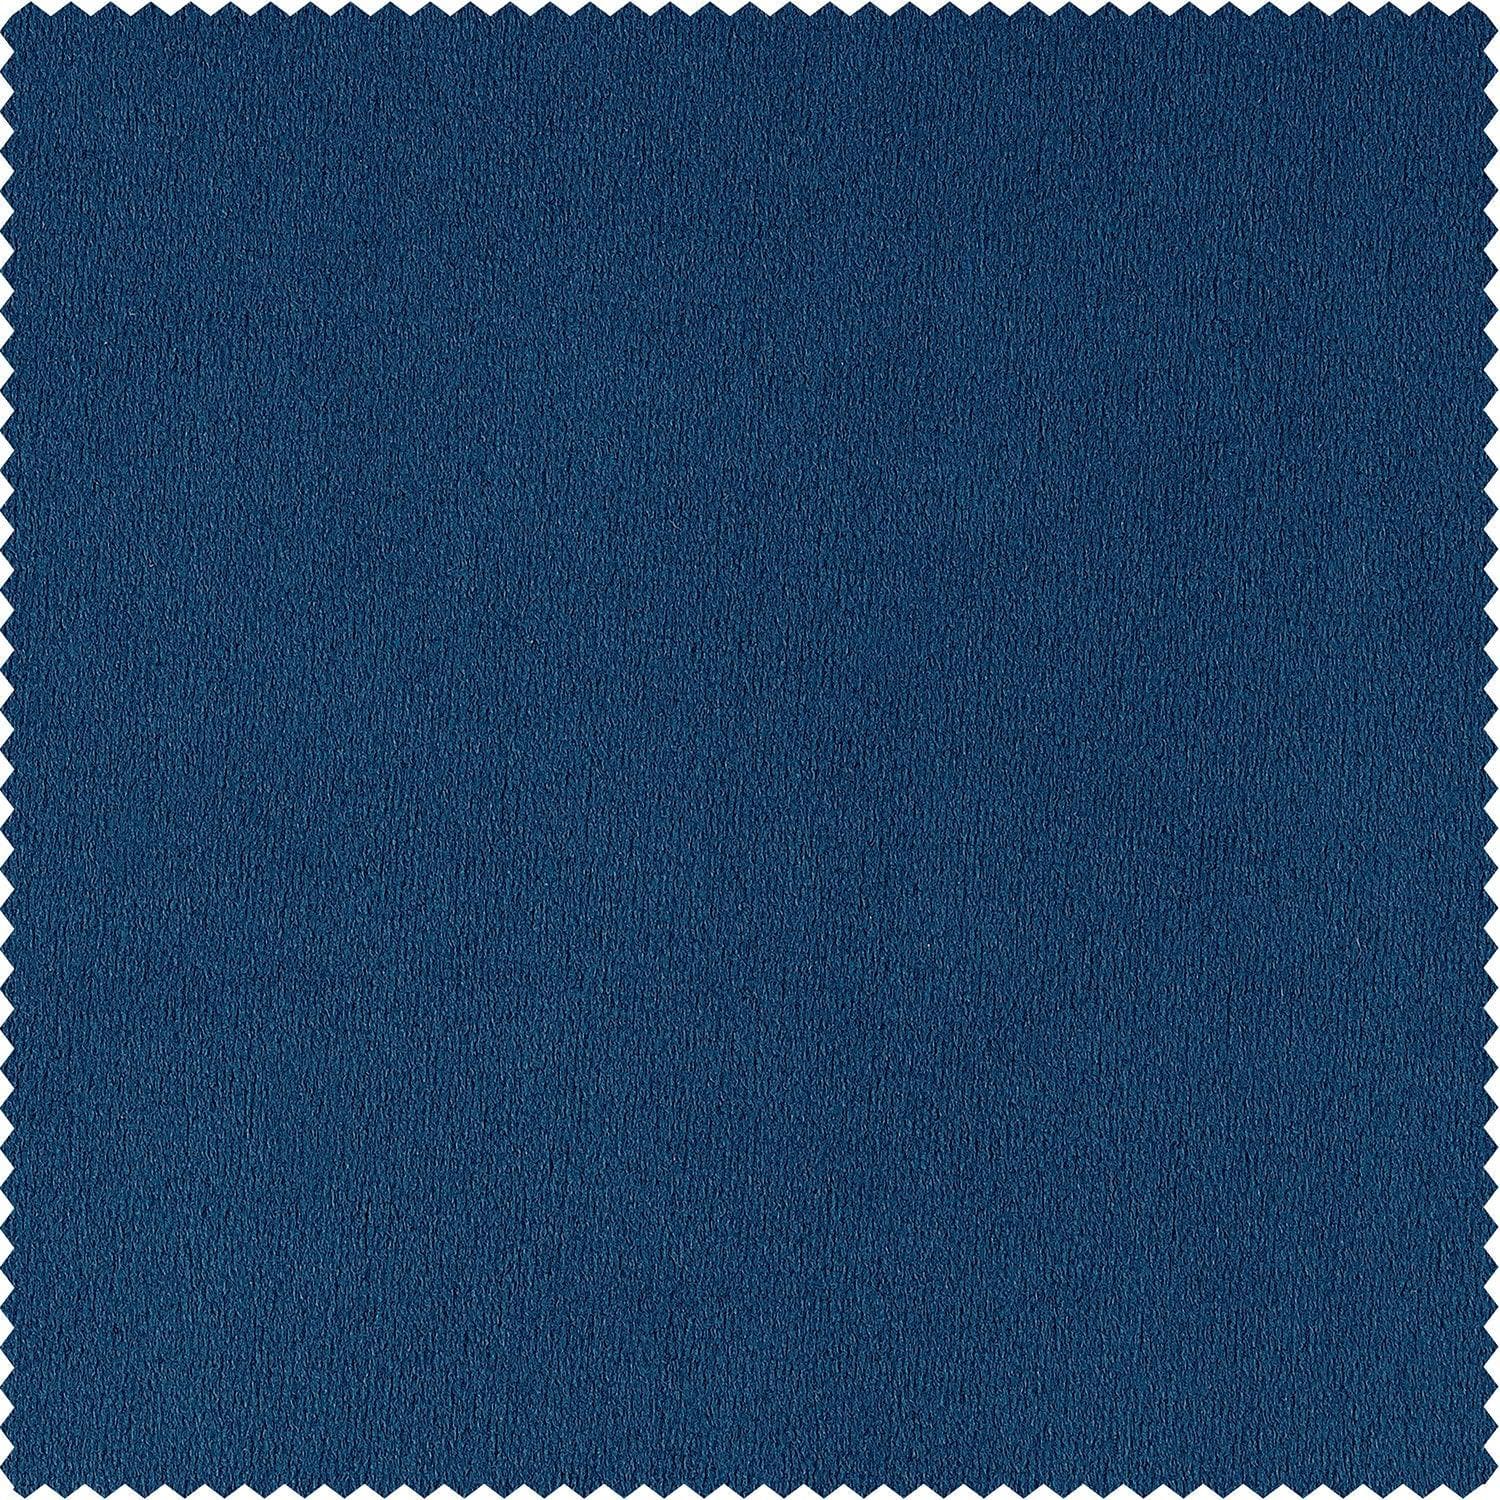 Union Blue Signature Velvet Cushion Covers - Pair